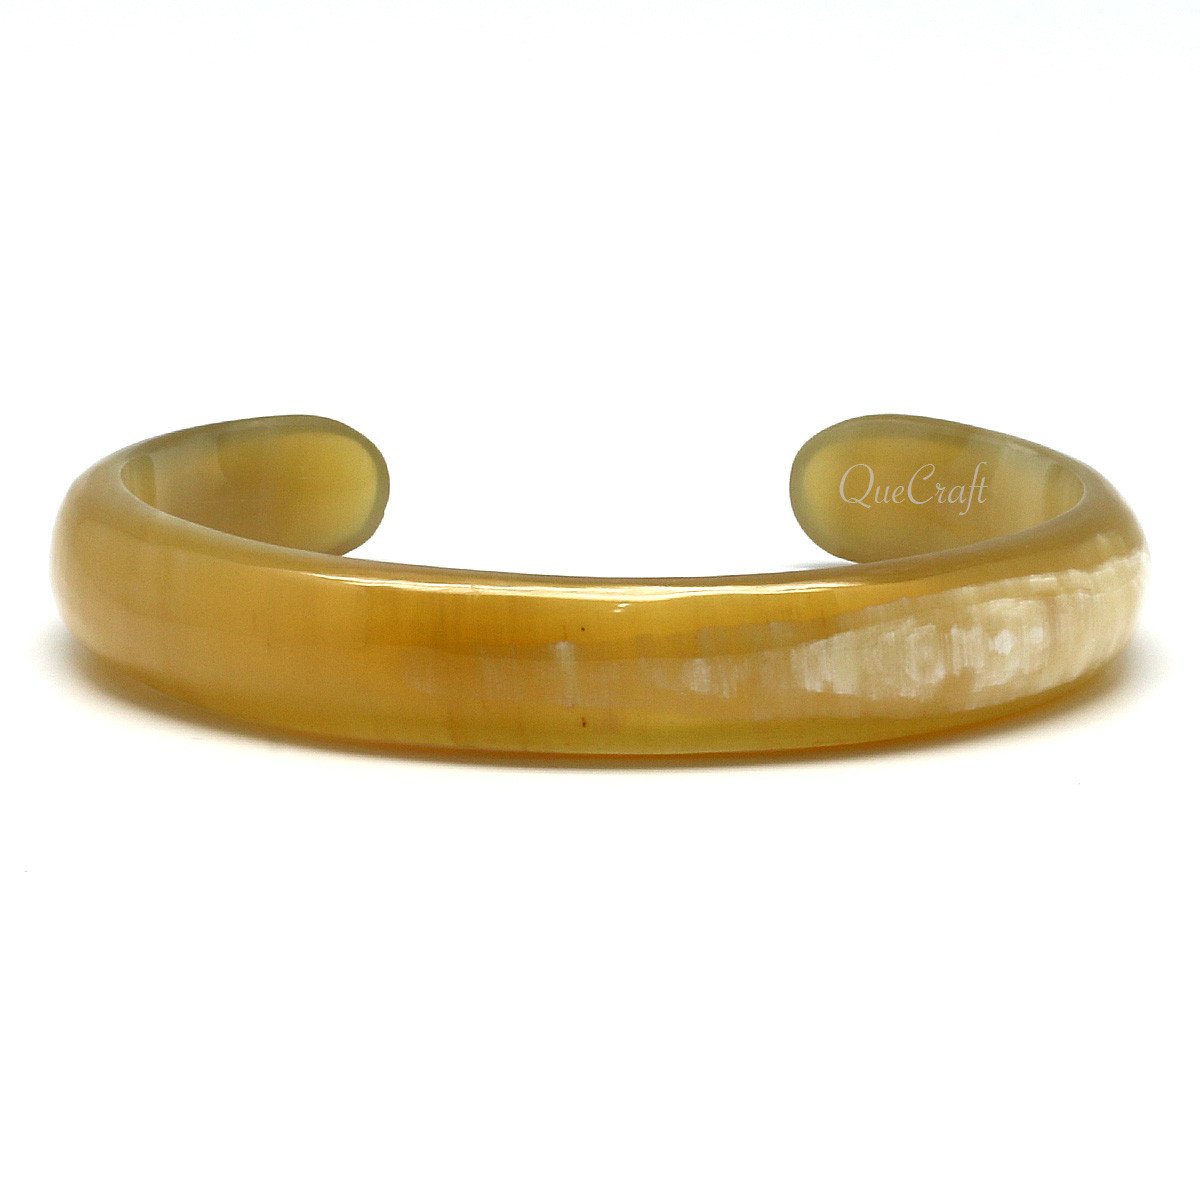 Horn Cuff Bracelet #10359 - HORN JEWELRY